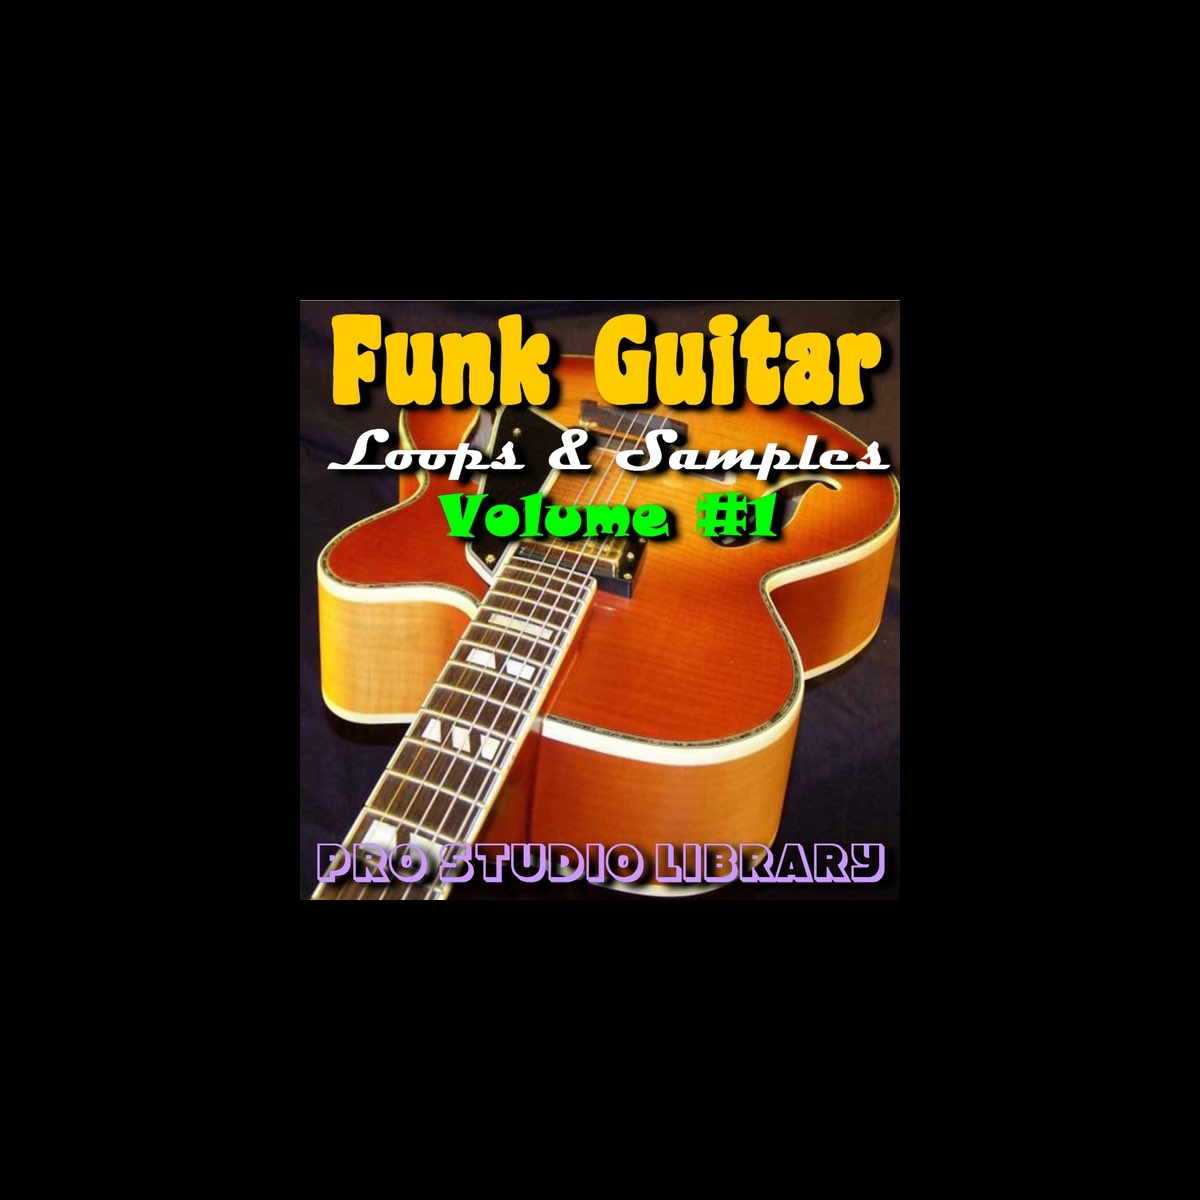 Funk Guitar Loops & Samples Volume#1 by Pro Studio Library on Apple Music